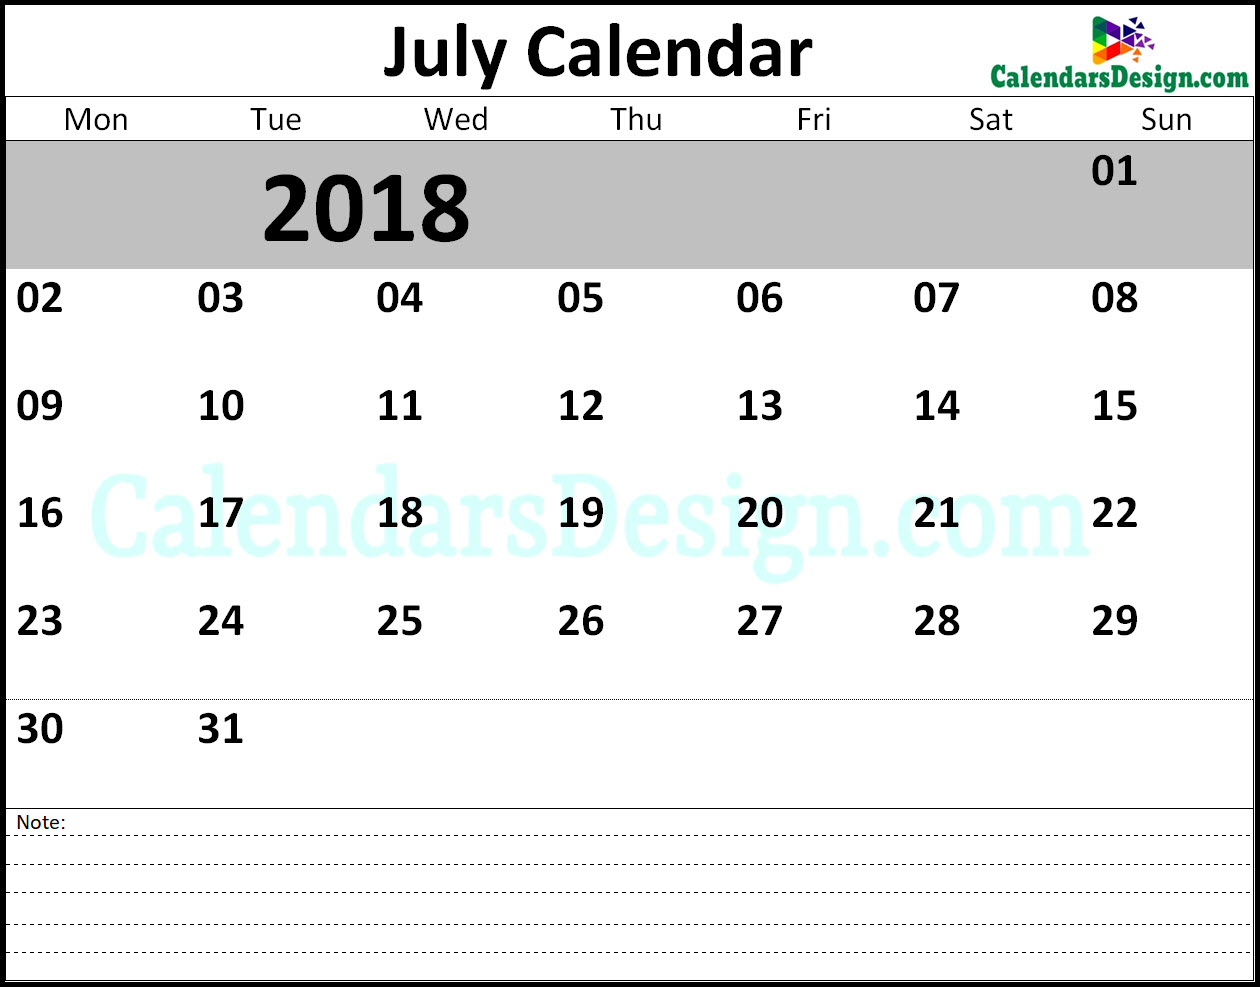 July 2018 Calendar Blank Template